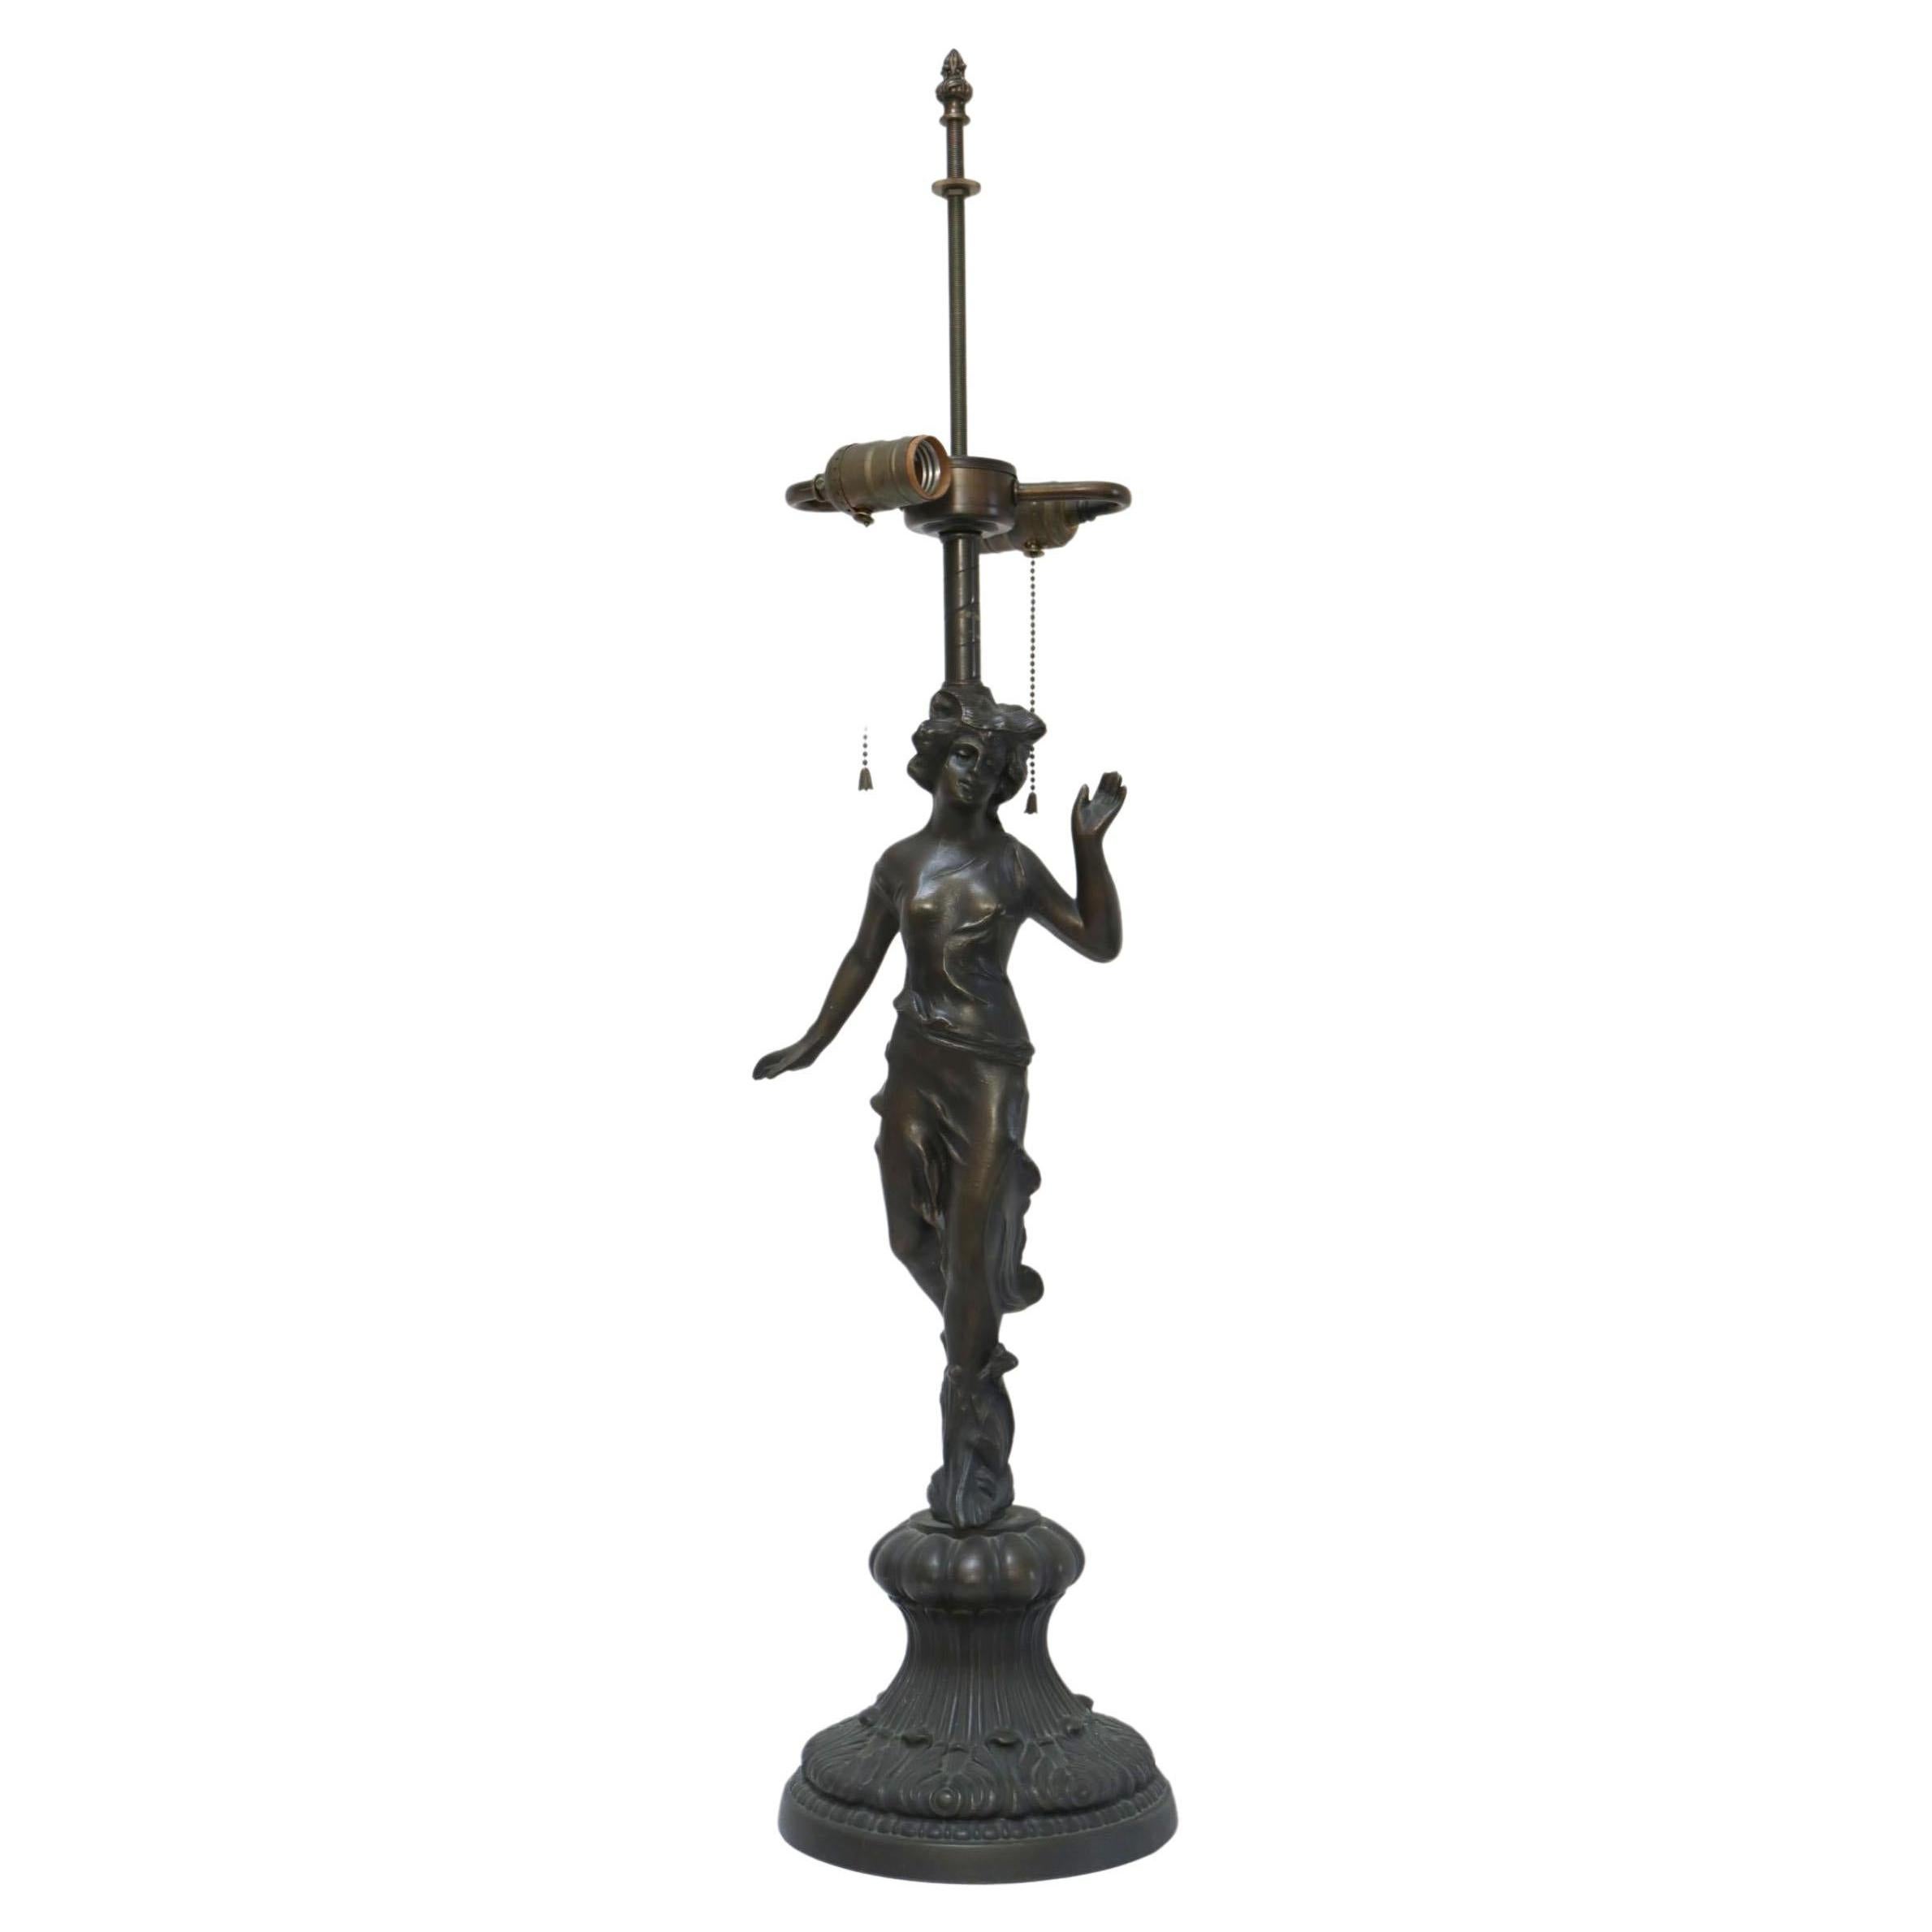 French 1920s Art Nouveau Bronze Verdigris Figural Table Lamp with Dual Socket